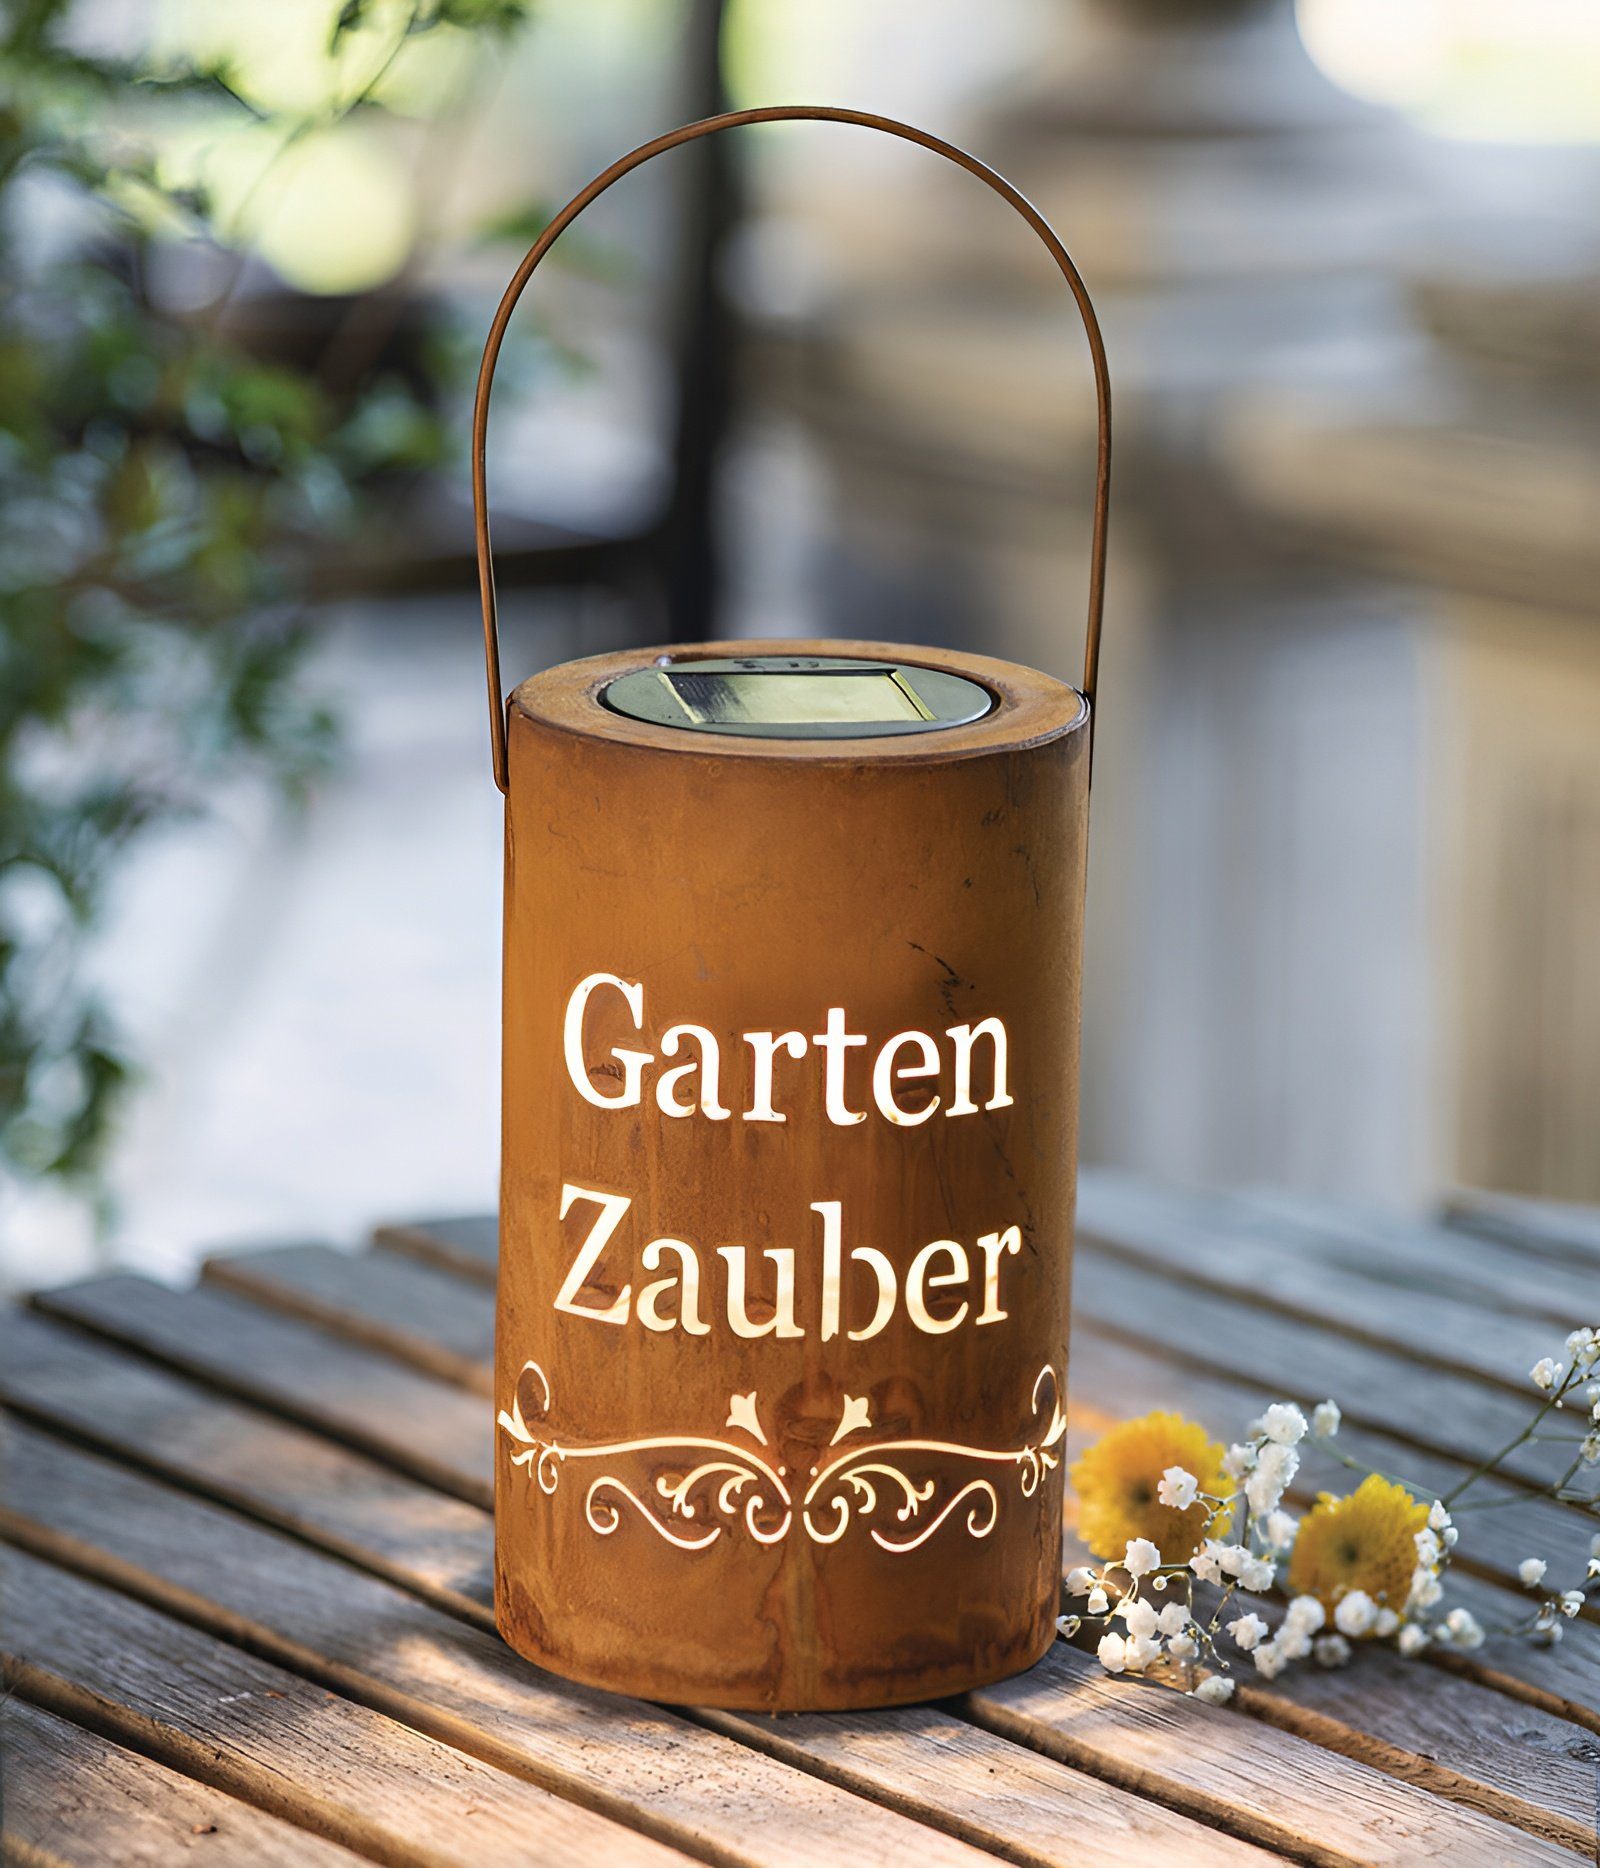 Outdoor LED Birne Amber-Finish Timer Beleuchtung Deko Glühbirne Hängen  Garten